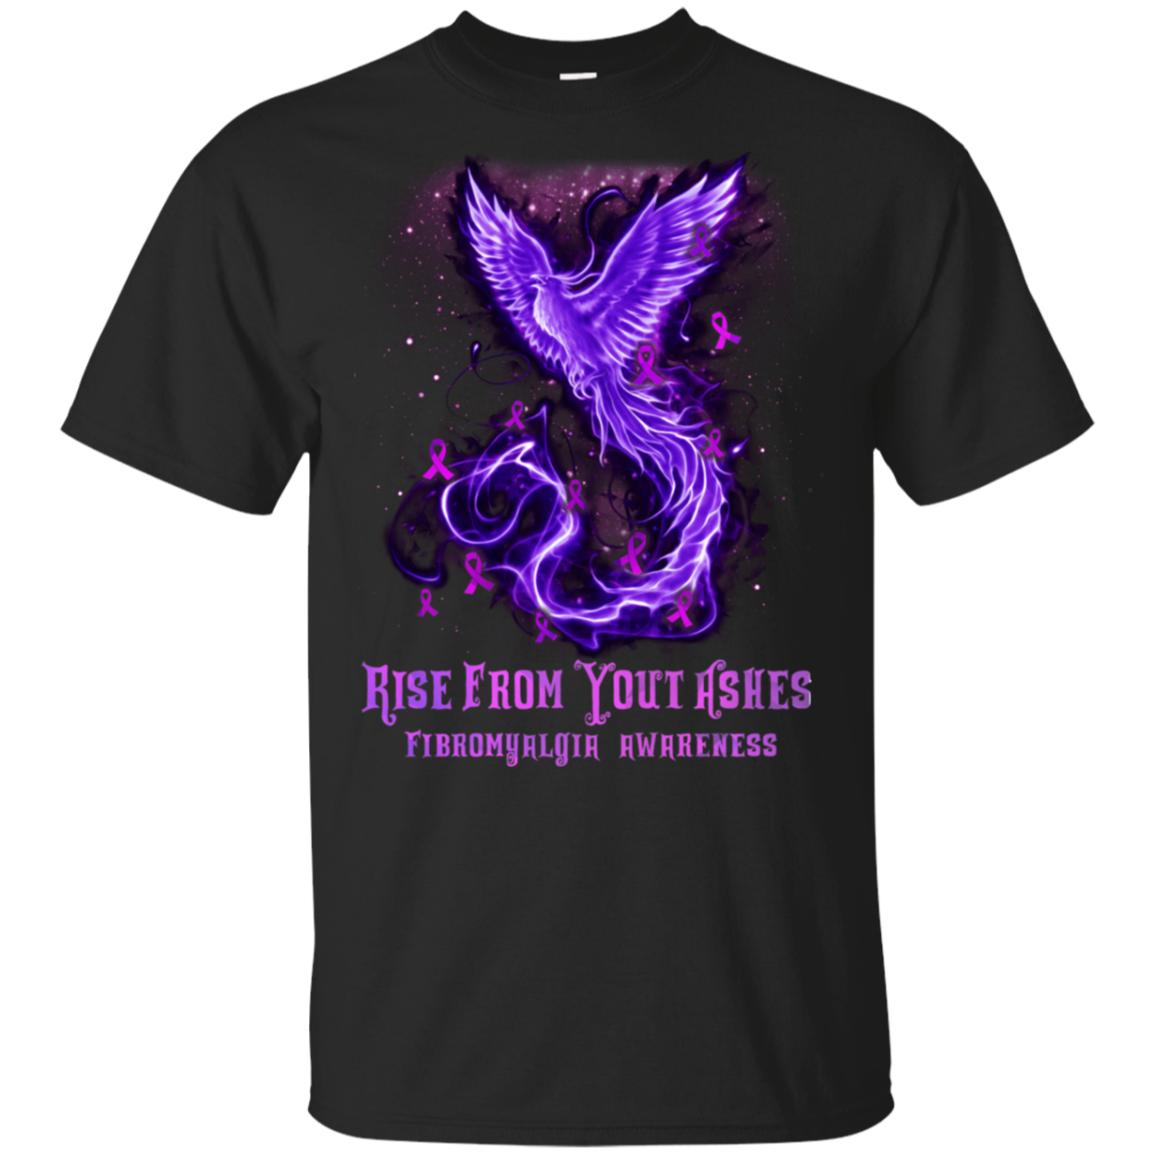 Rise From Your Ashes Fibromyalgia Awareness T-shirt Purple Phoenix TT05